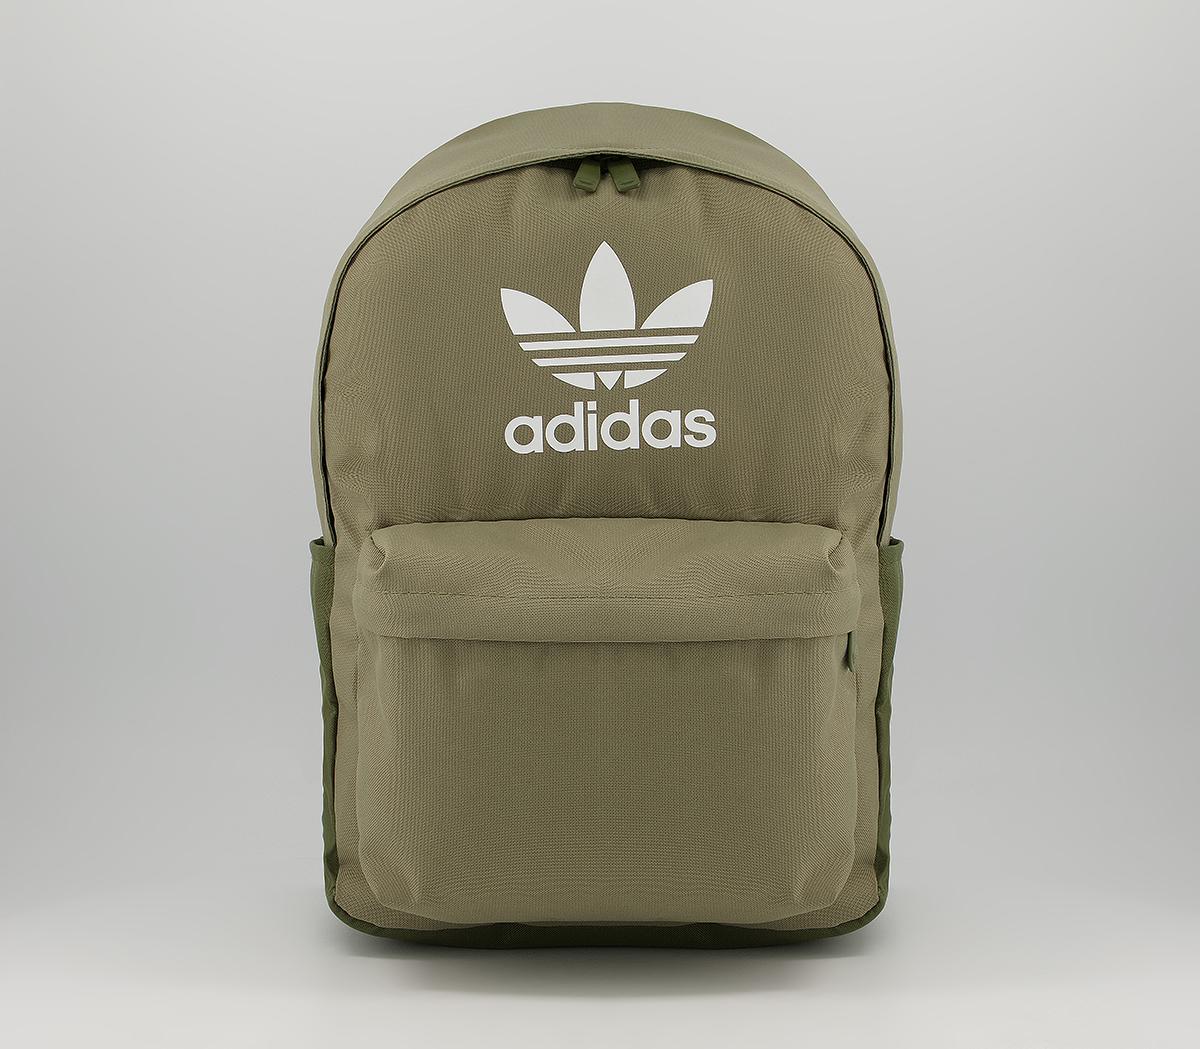 adidasAdicolor BackpackOrbit Green